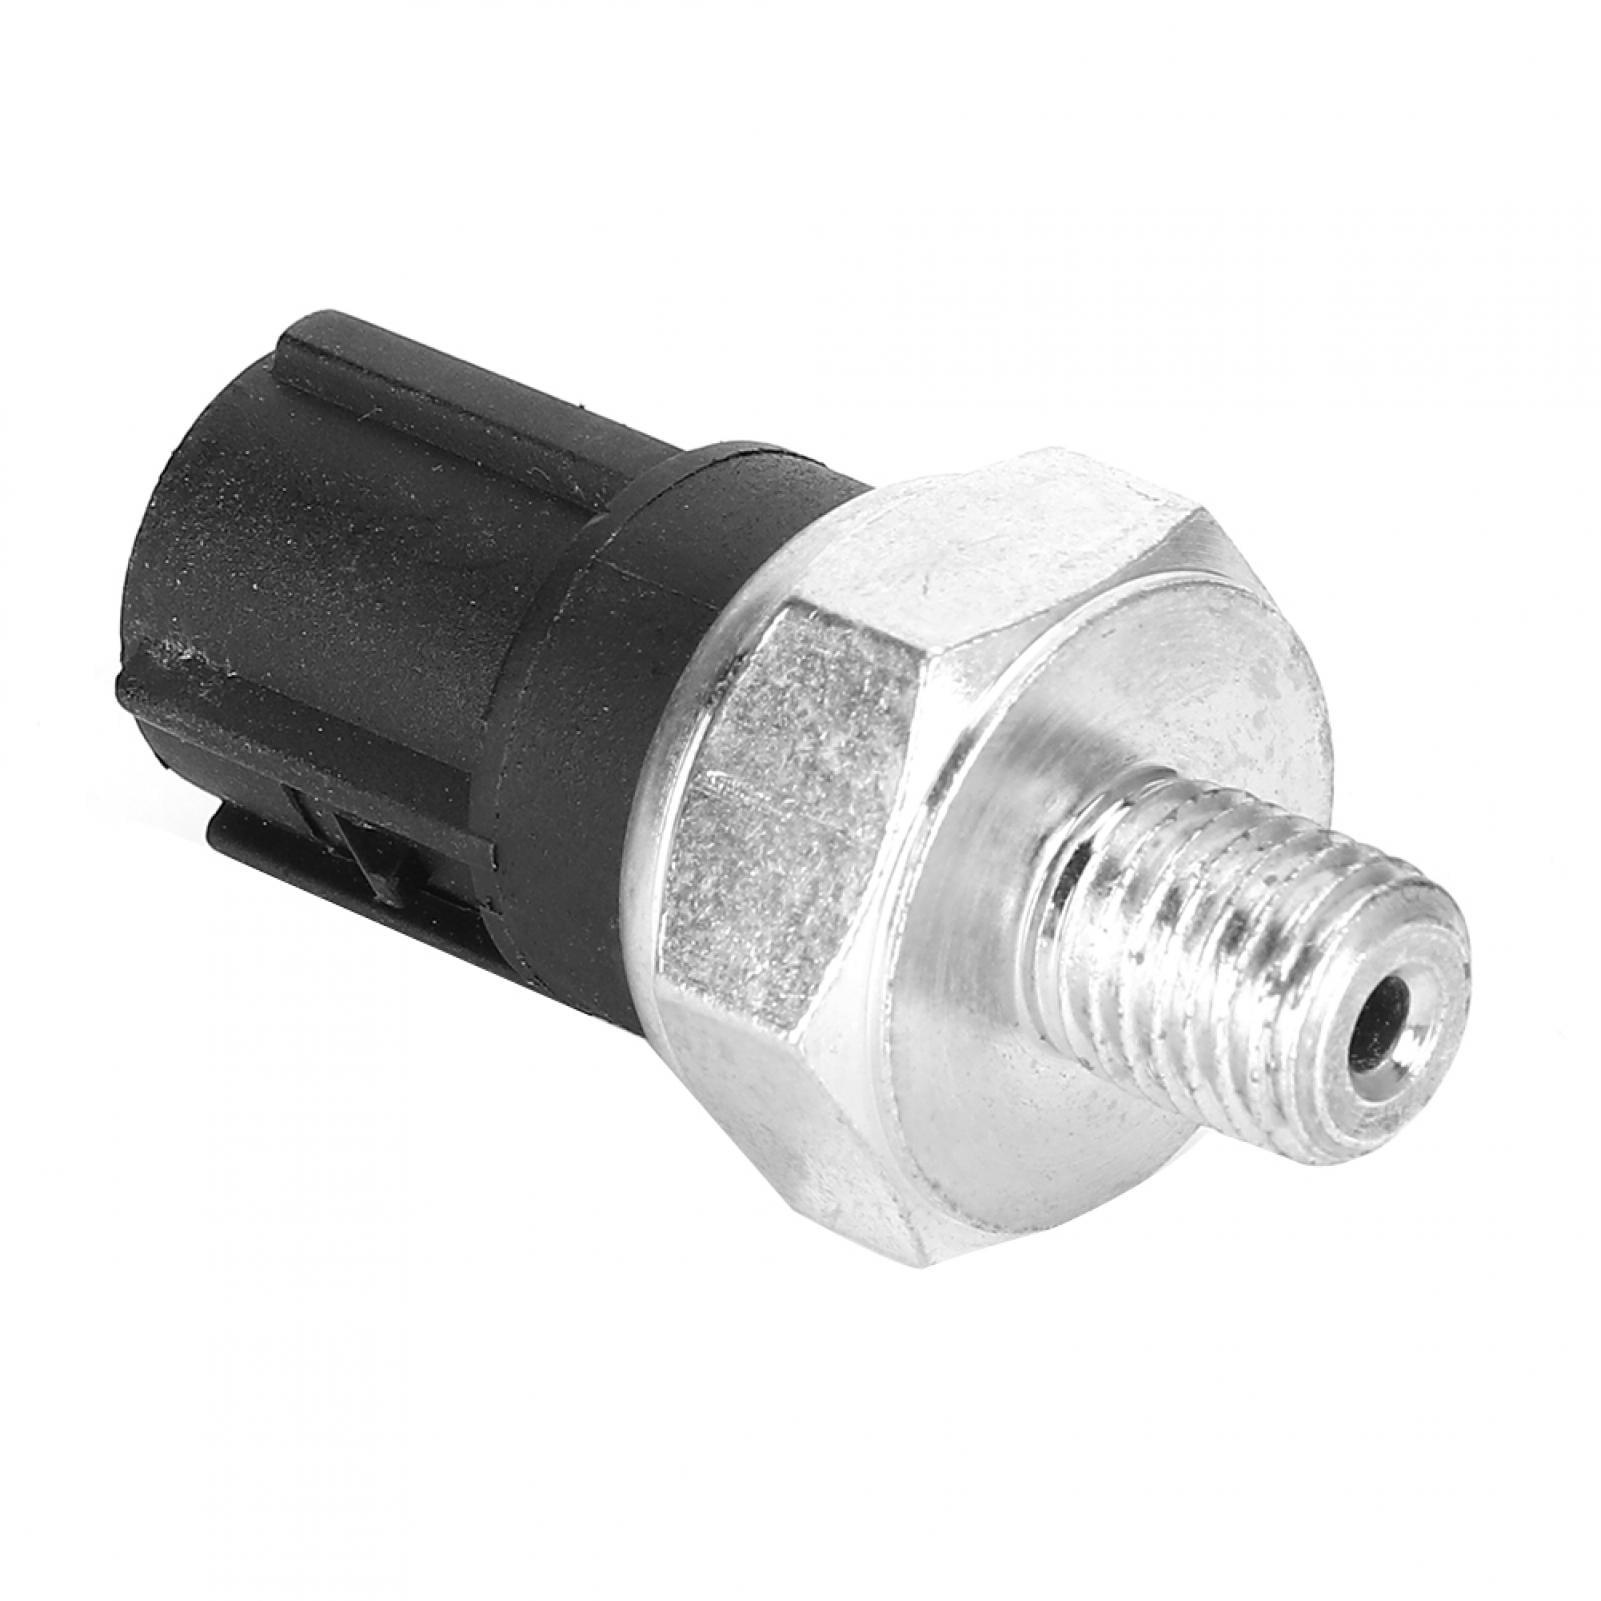 37250-pne-g01 VTEC Oil Pressure Switch Sensor 37250PNEG01 